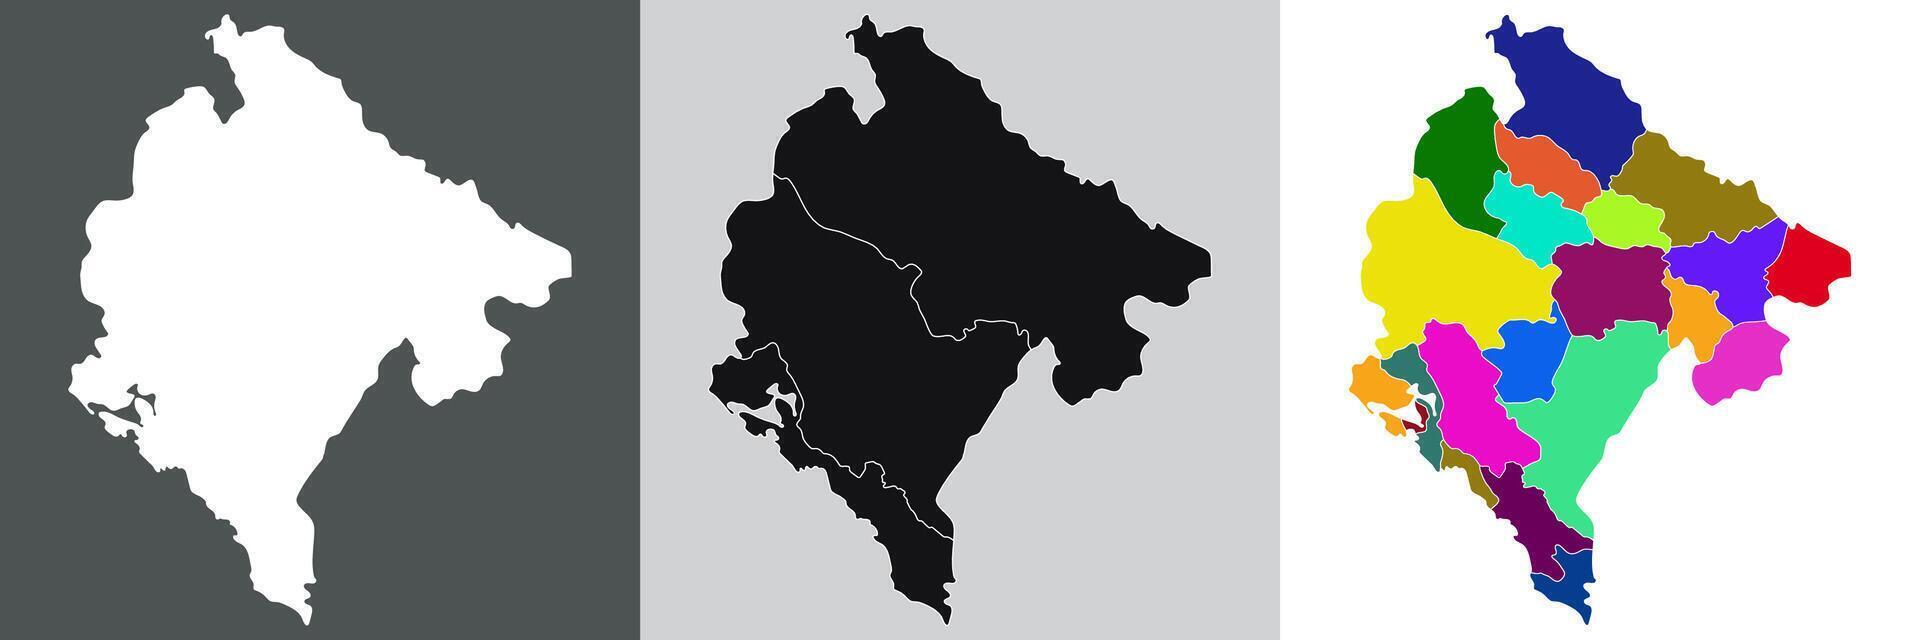 montenegro mapa. mapa de montenegro vector